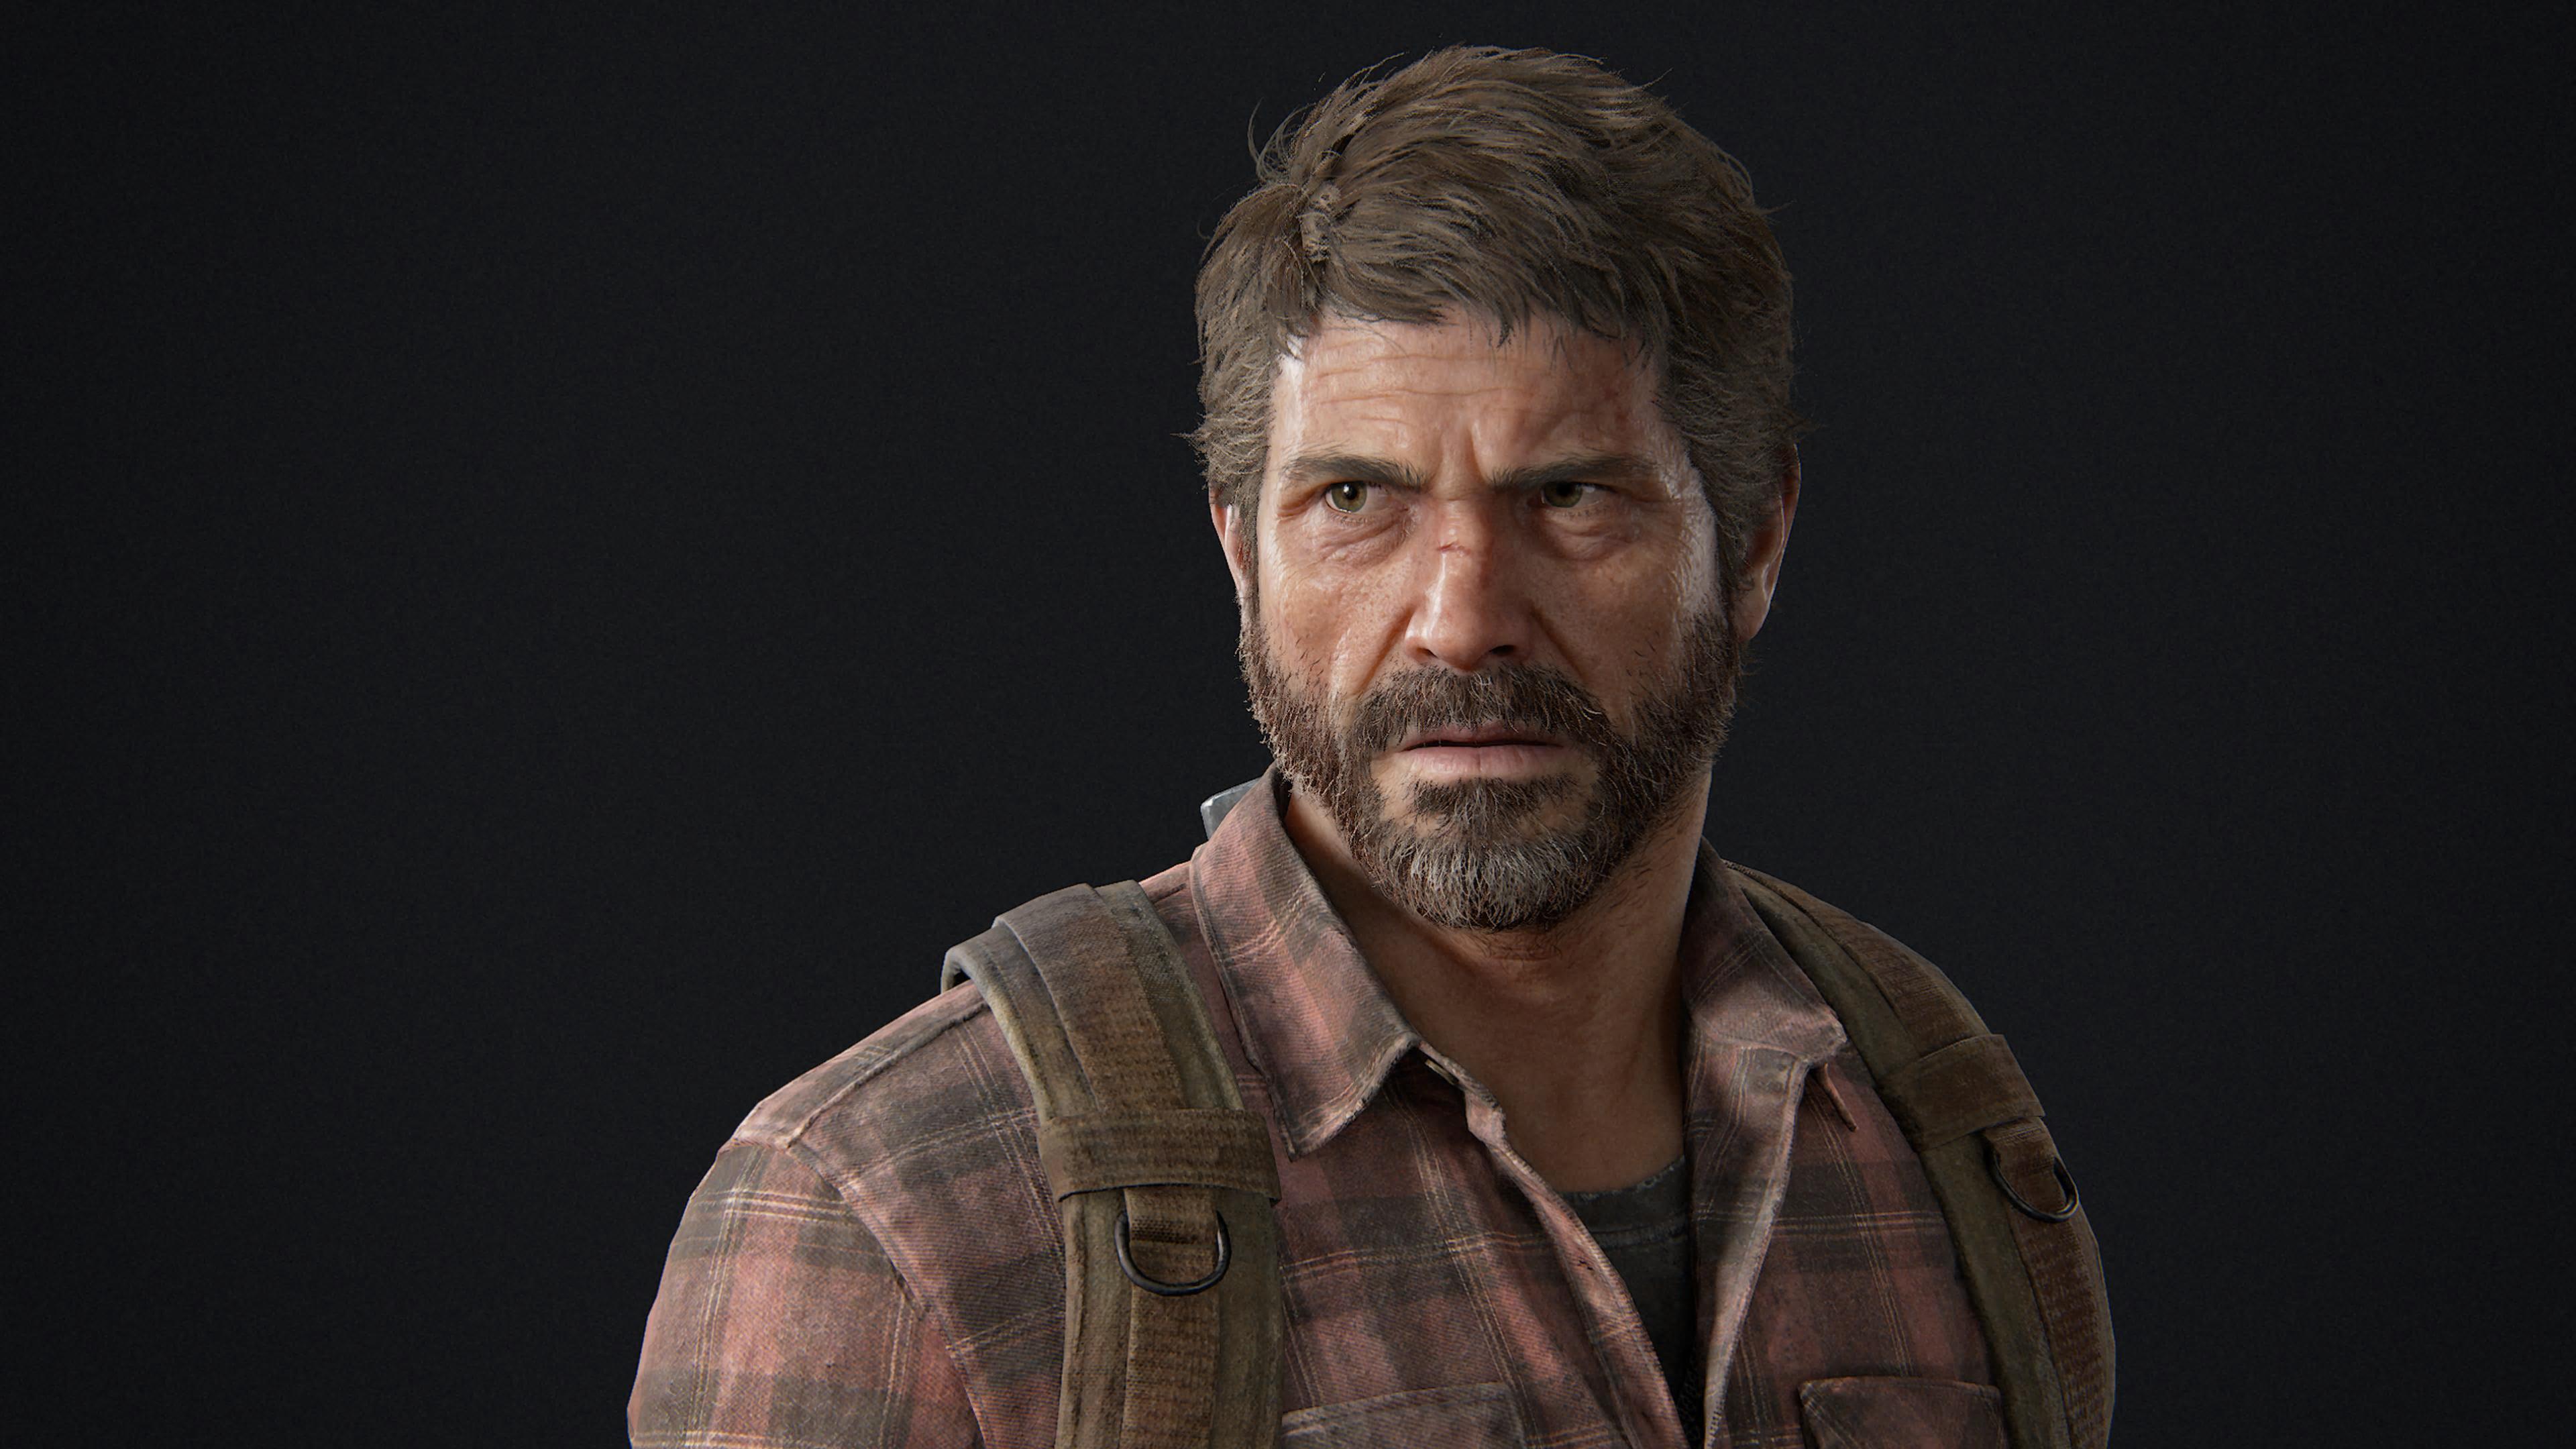 The Last of Us Part 1 PC Review - The Final Verdict 